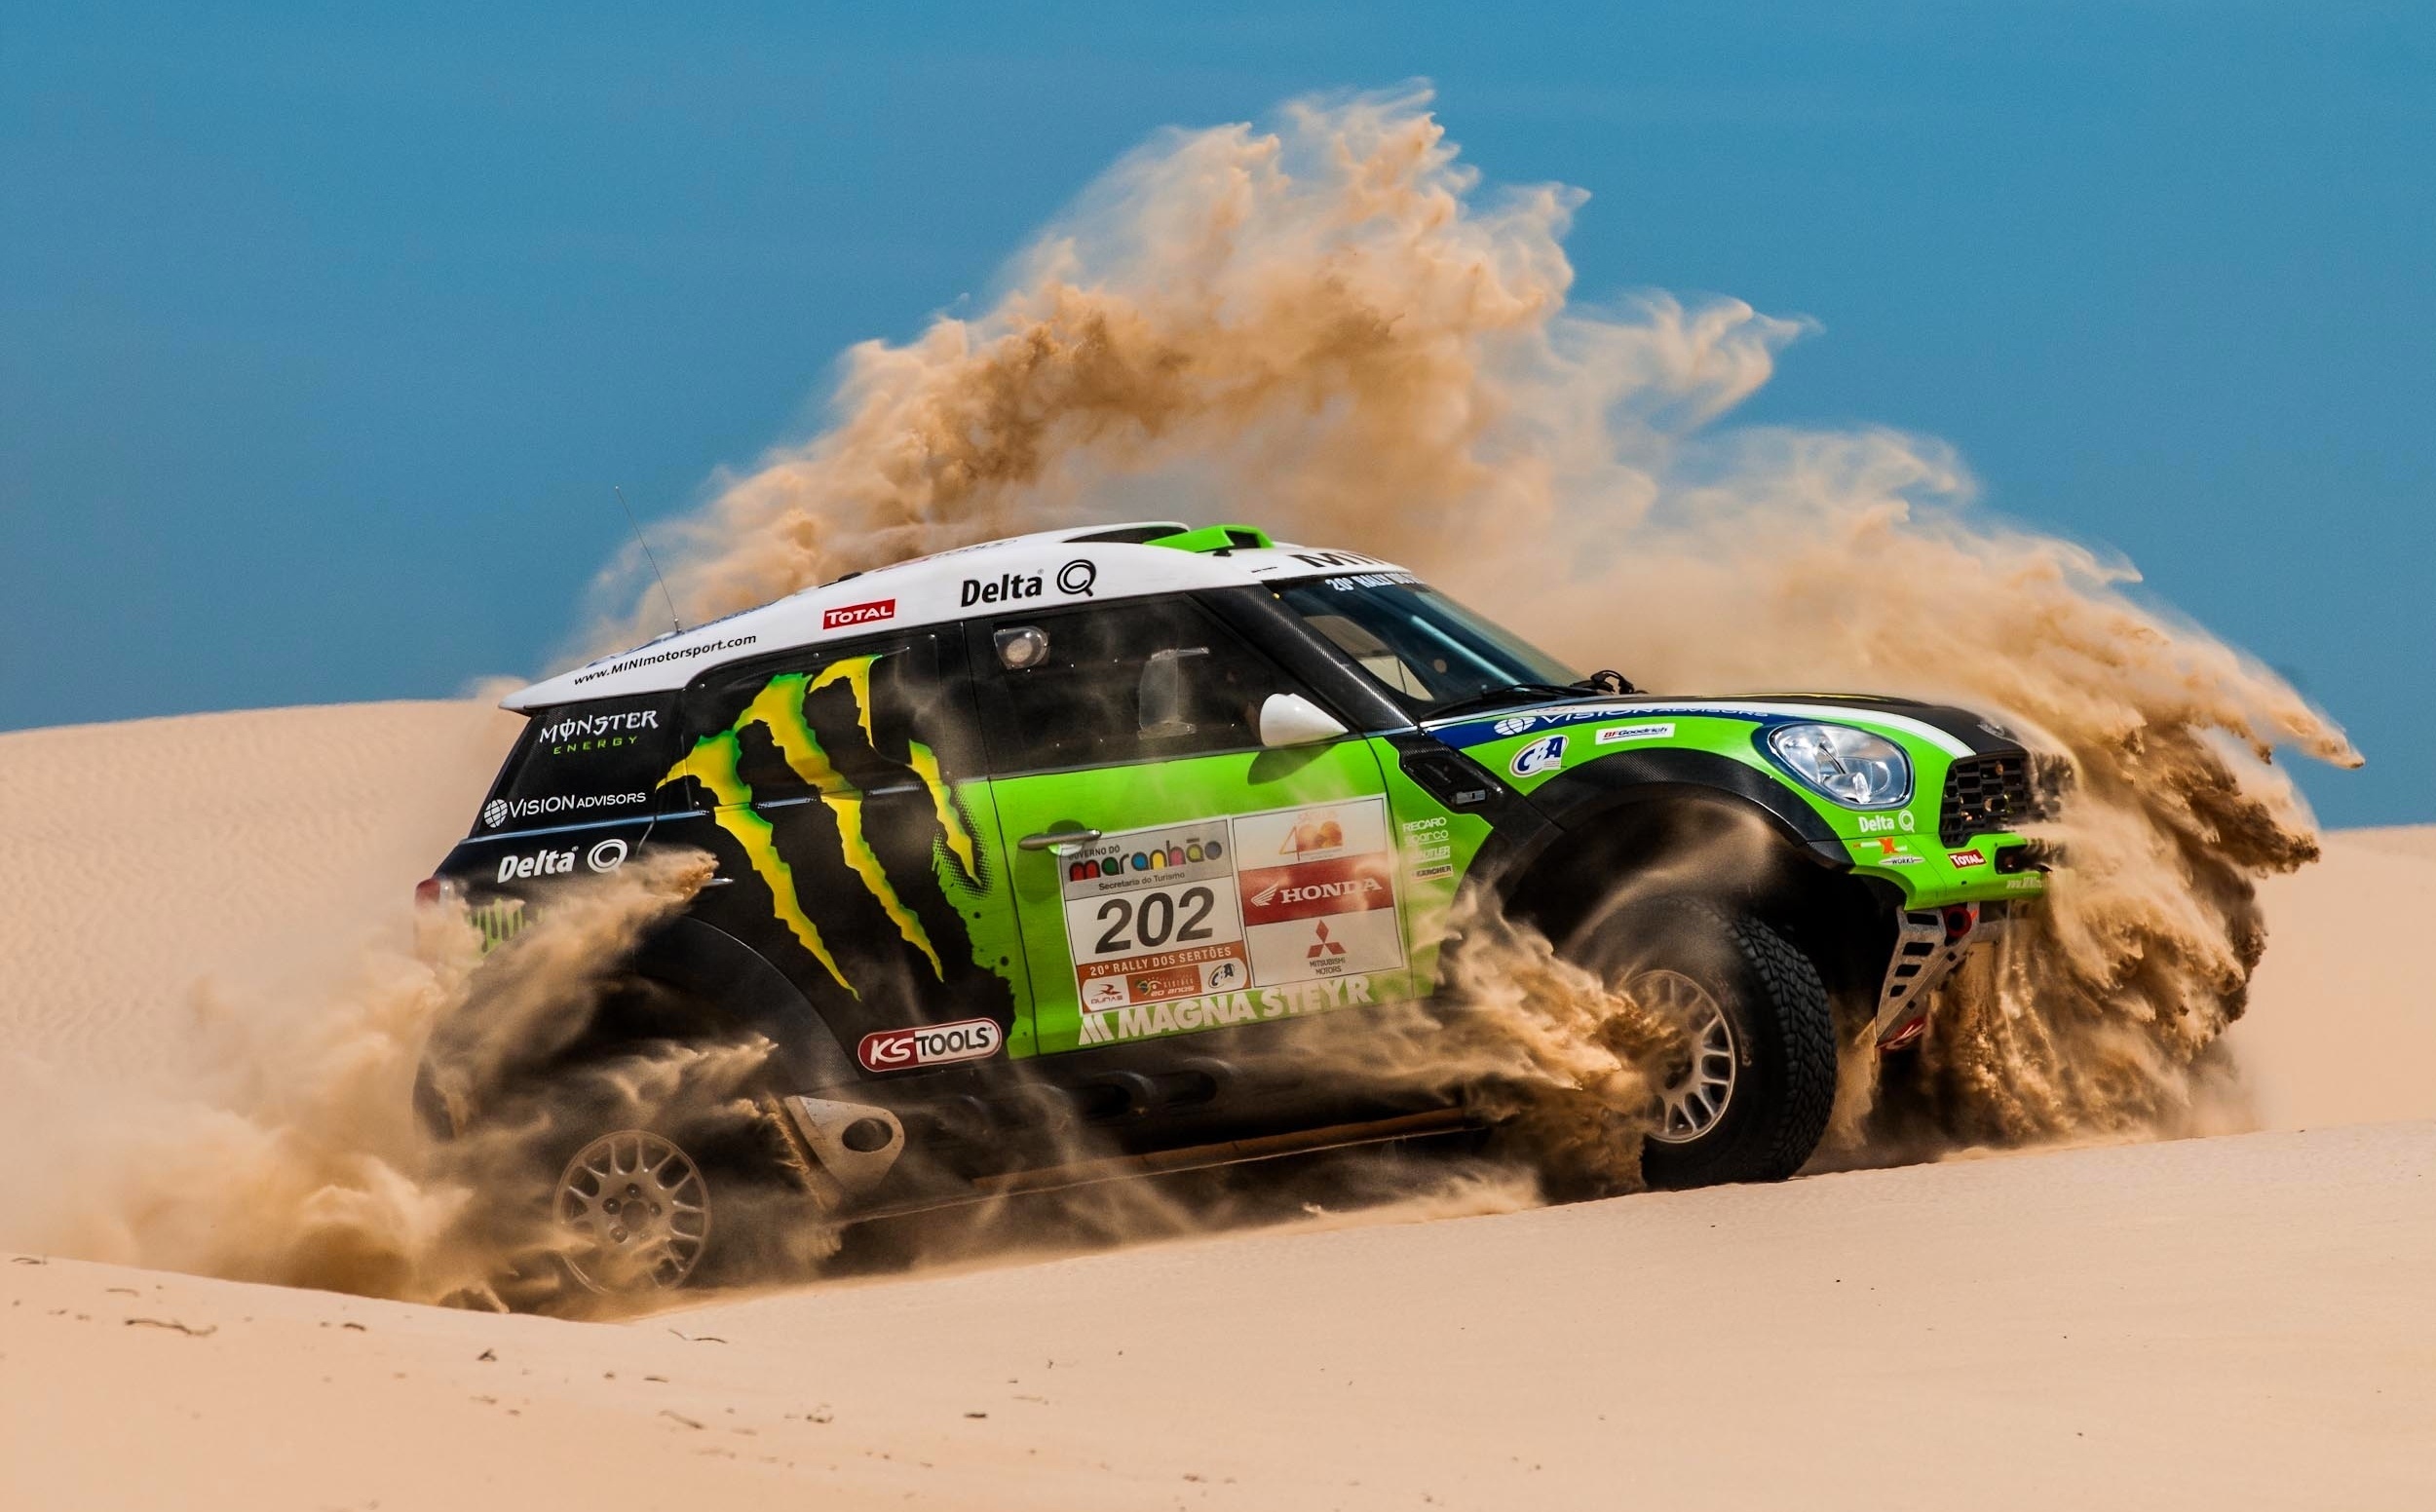 Dakar Rally: MINI X-Raid All4 Racing Countryman, Cross-country rally vehicles, A Dakar-spec car. 2500x1560 HD Wallpaper.